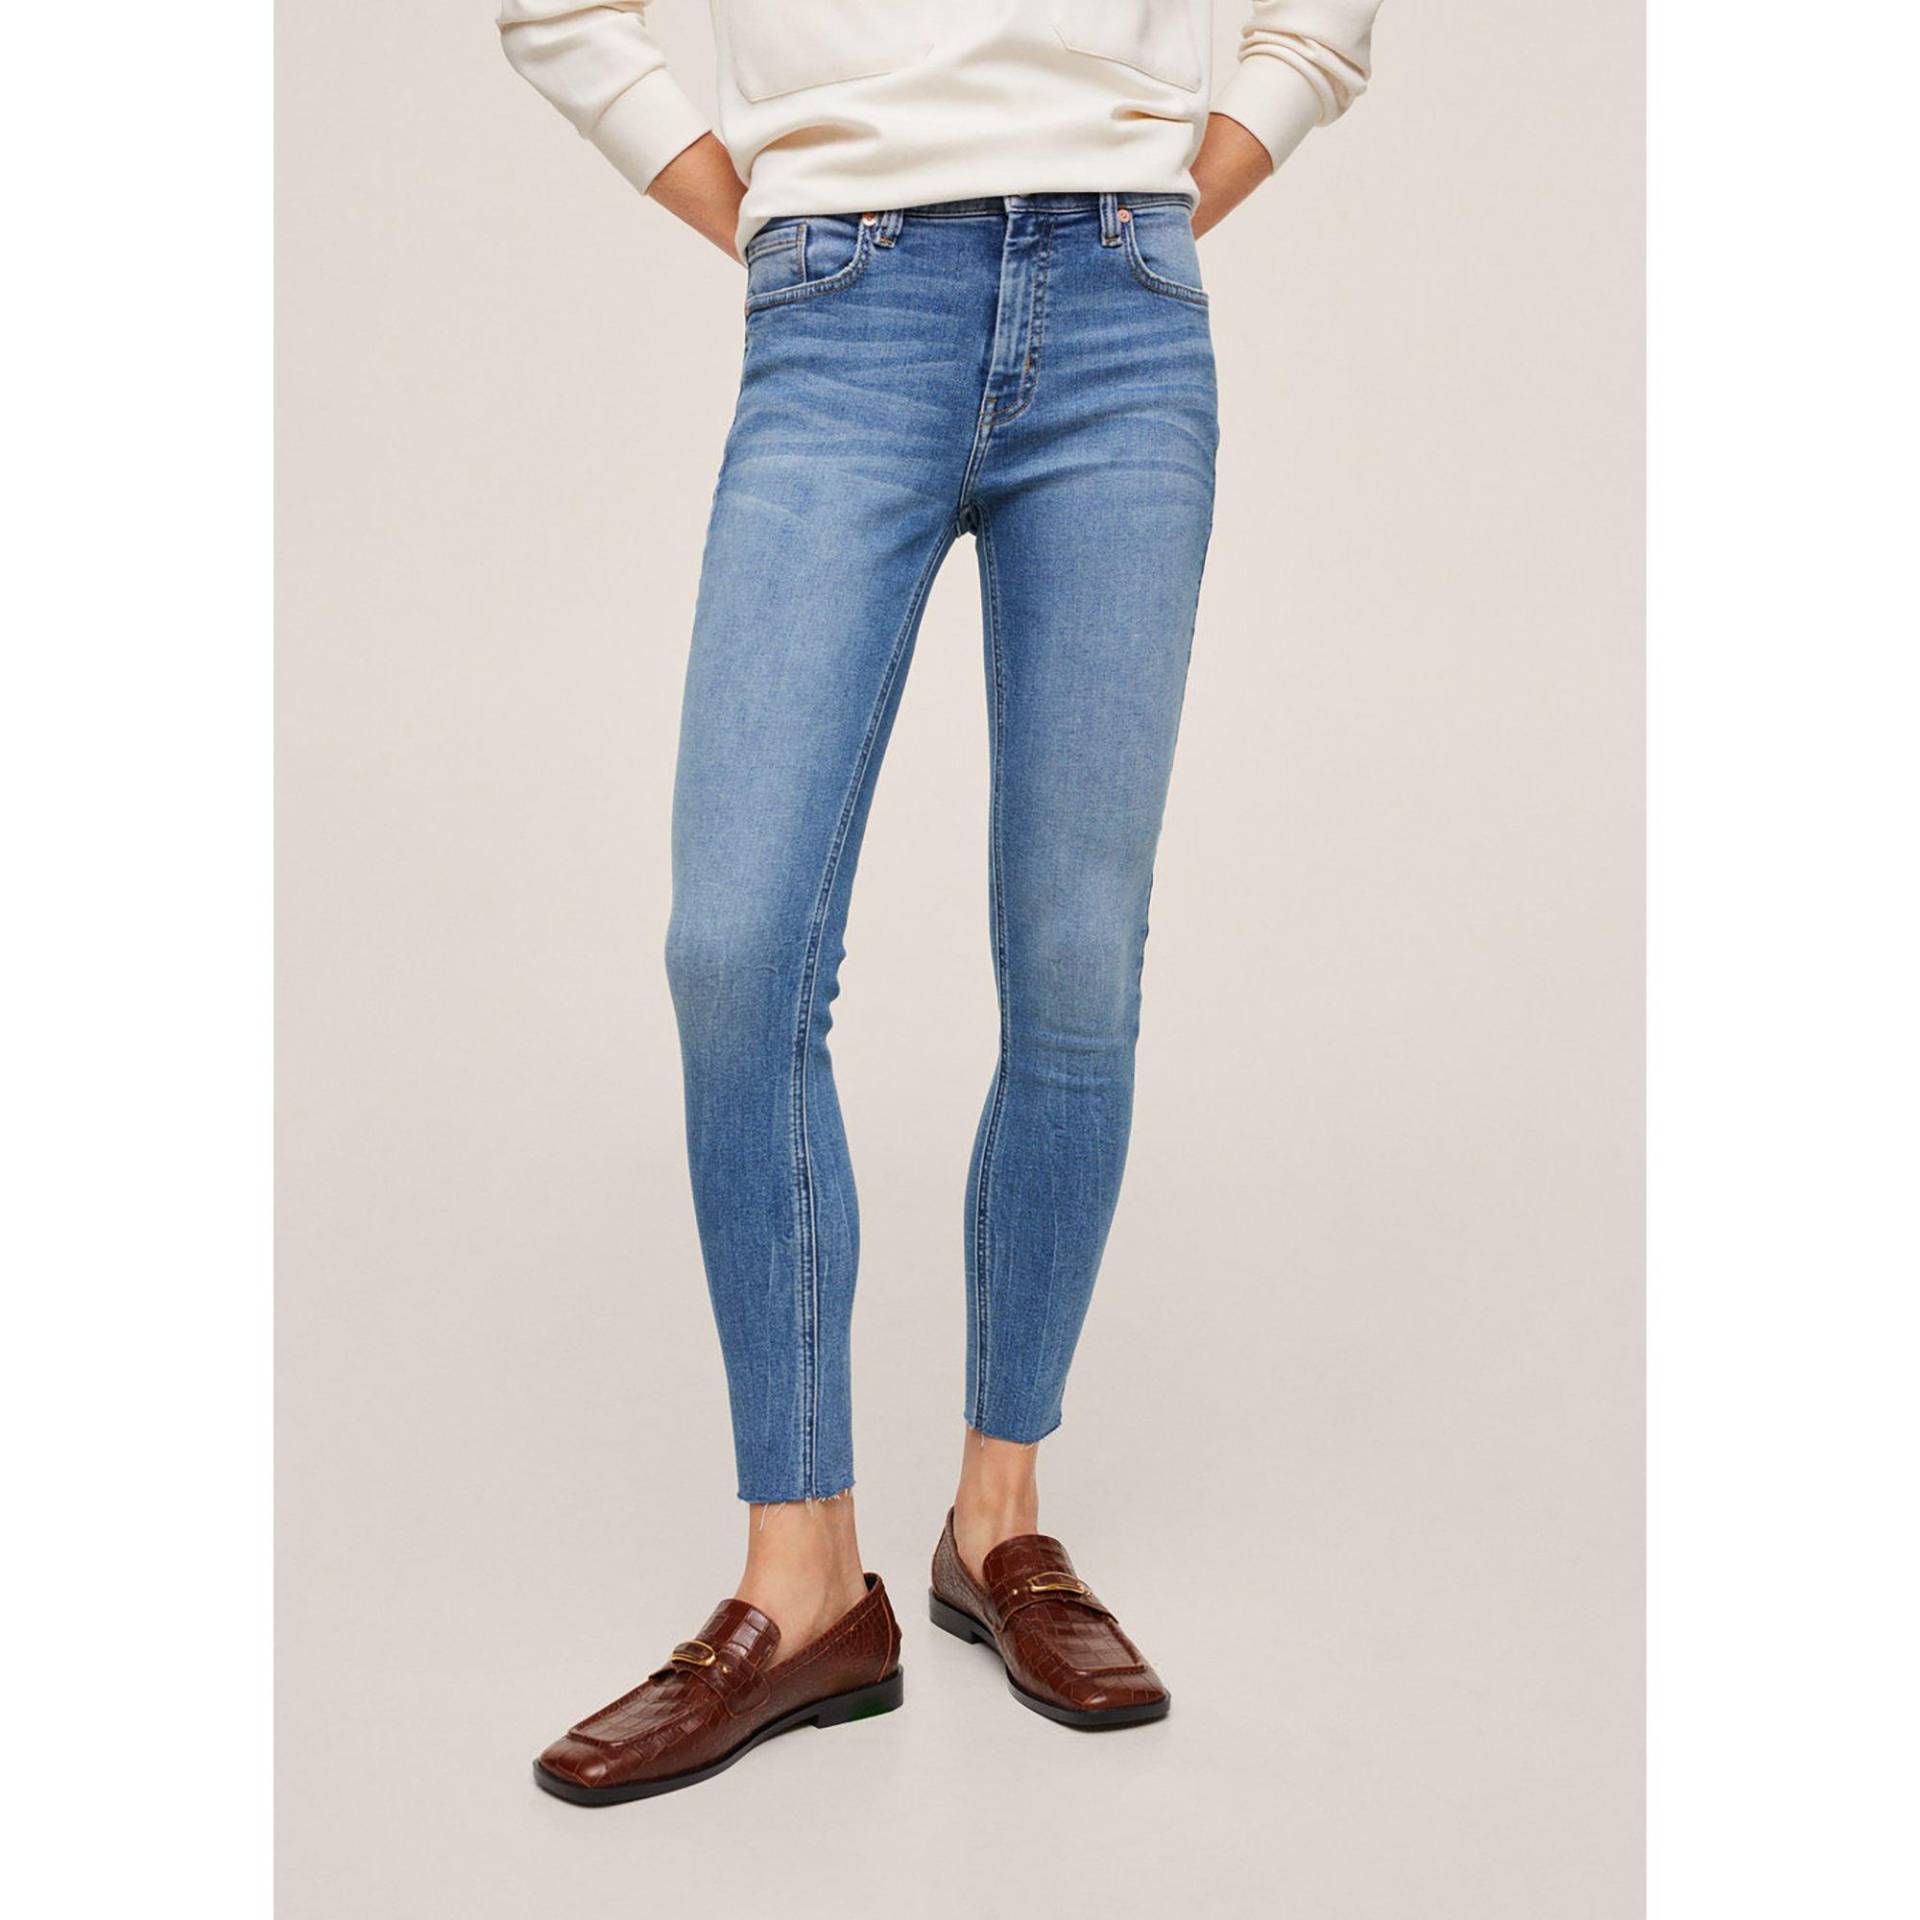 Jeans, Skinny Fit Damen Blau  44 von MANGO